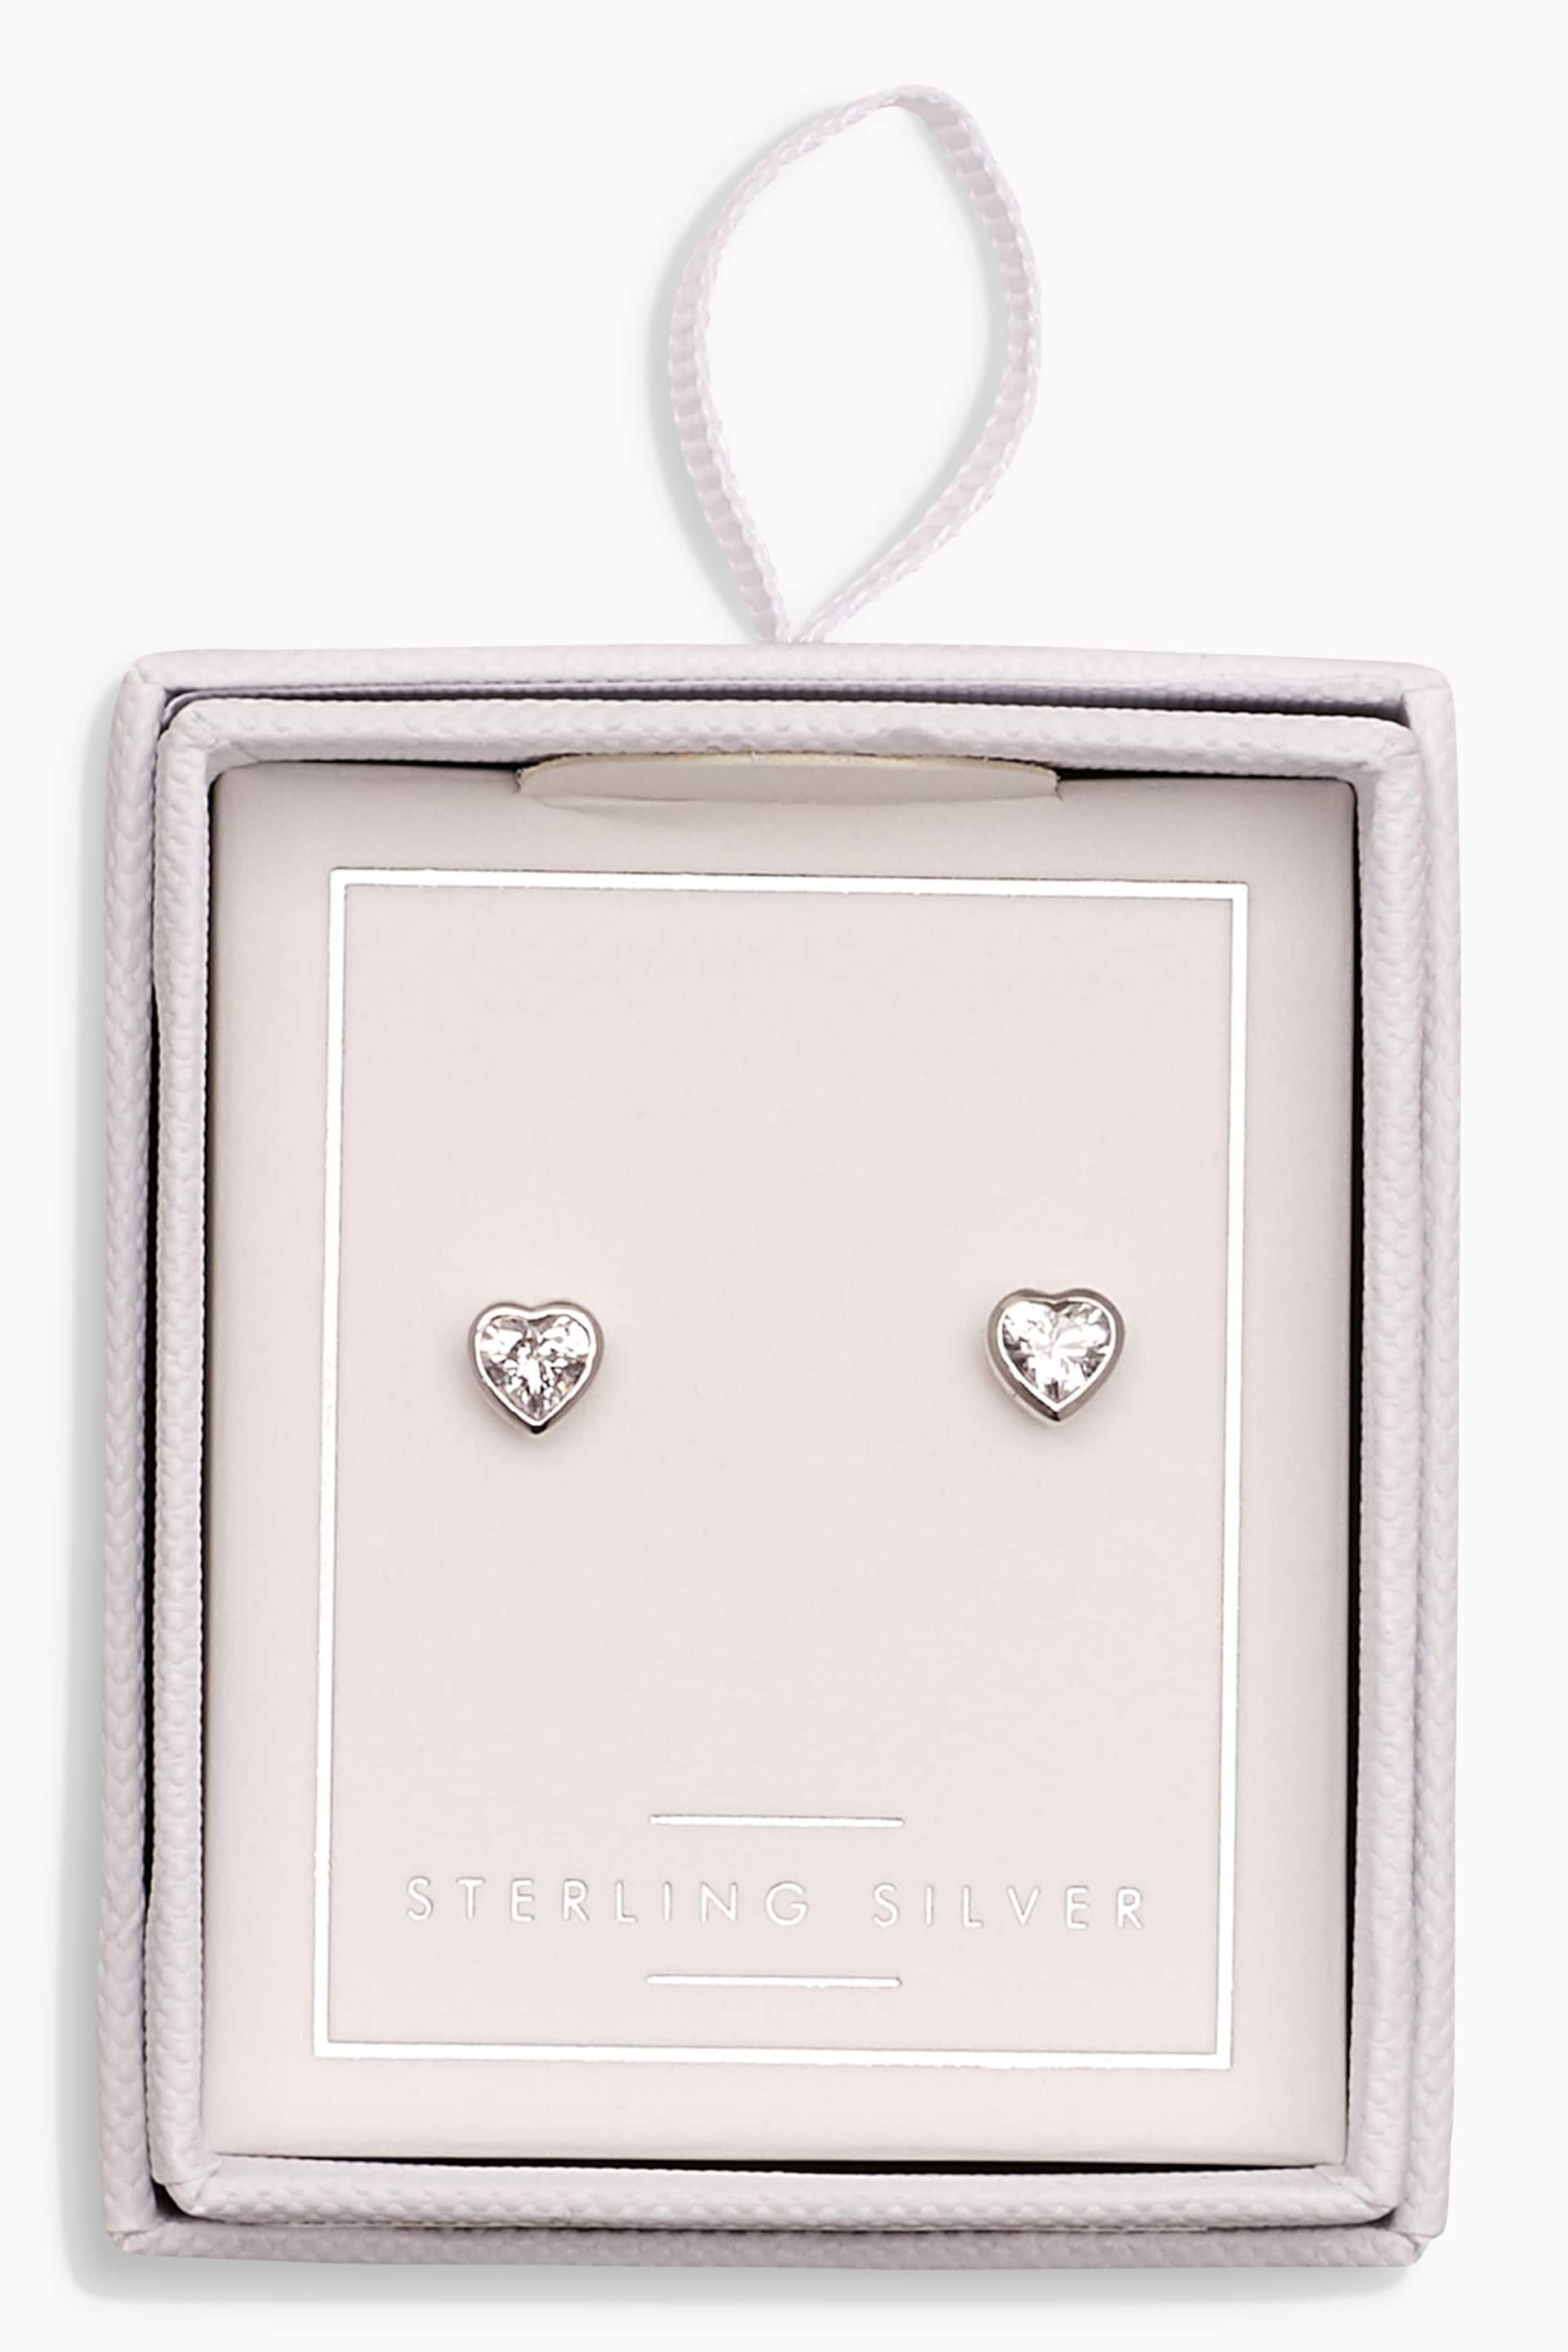 Sterling Silver Delicate Heart Stud Earrings - Image 3 of 3